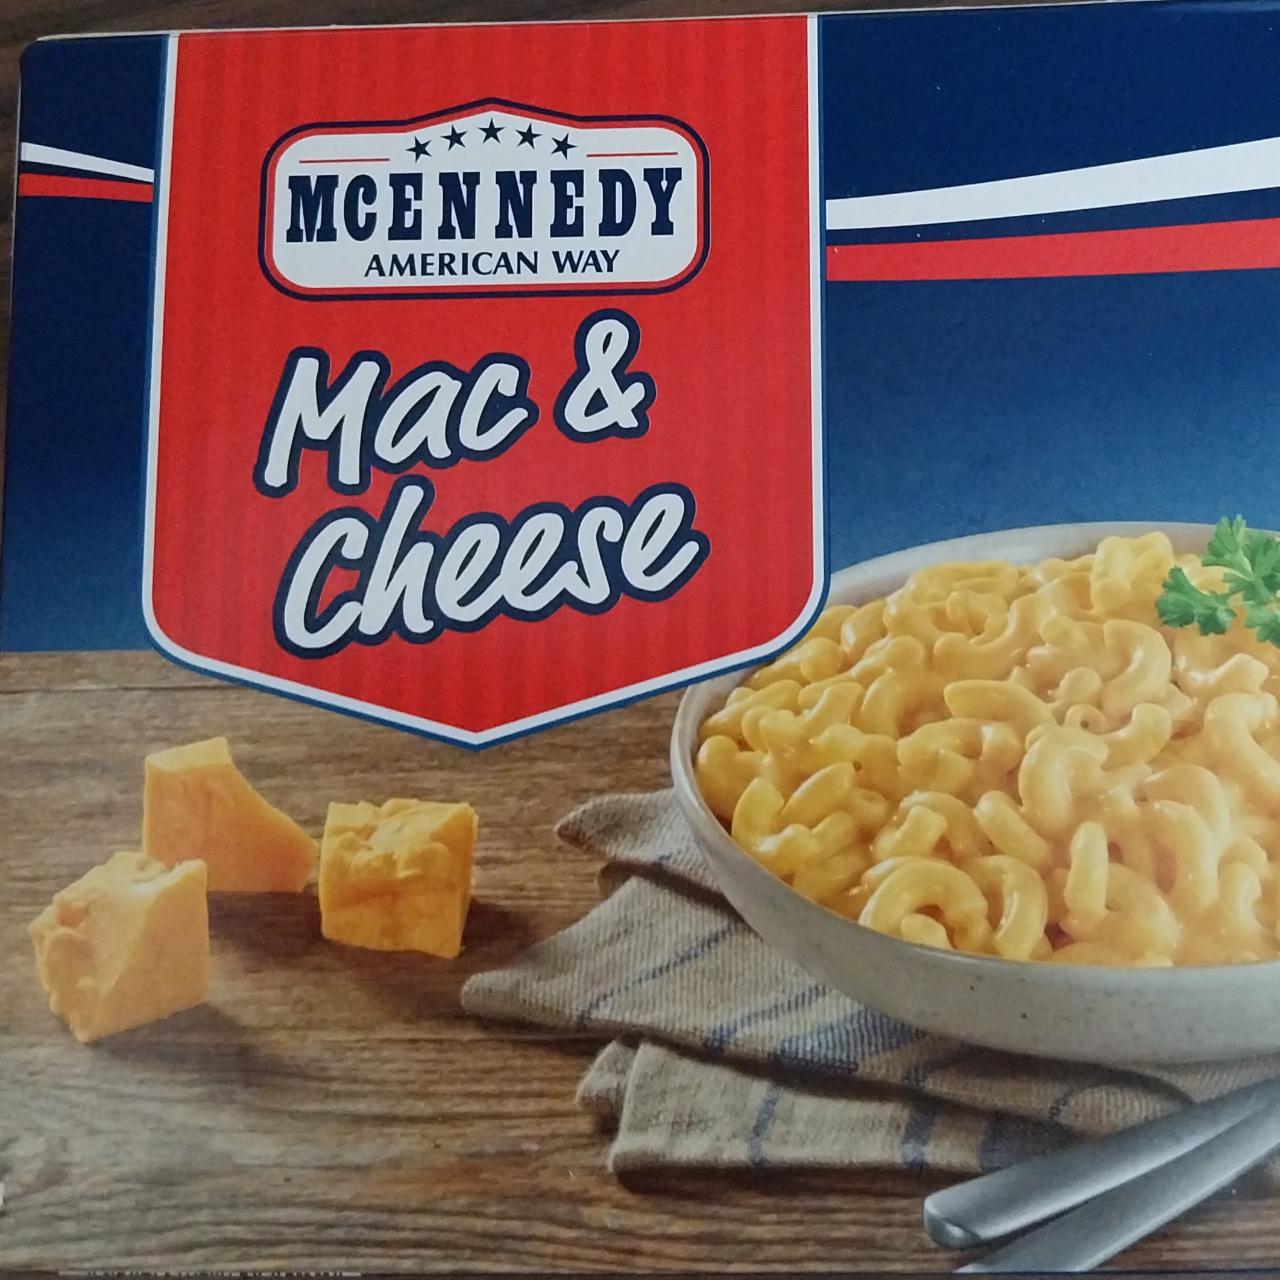 Képek - Mac & cheese McEnnedy American Way